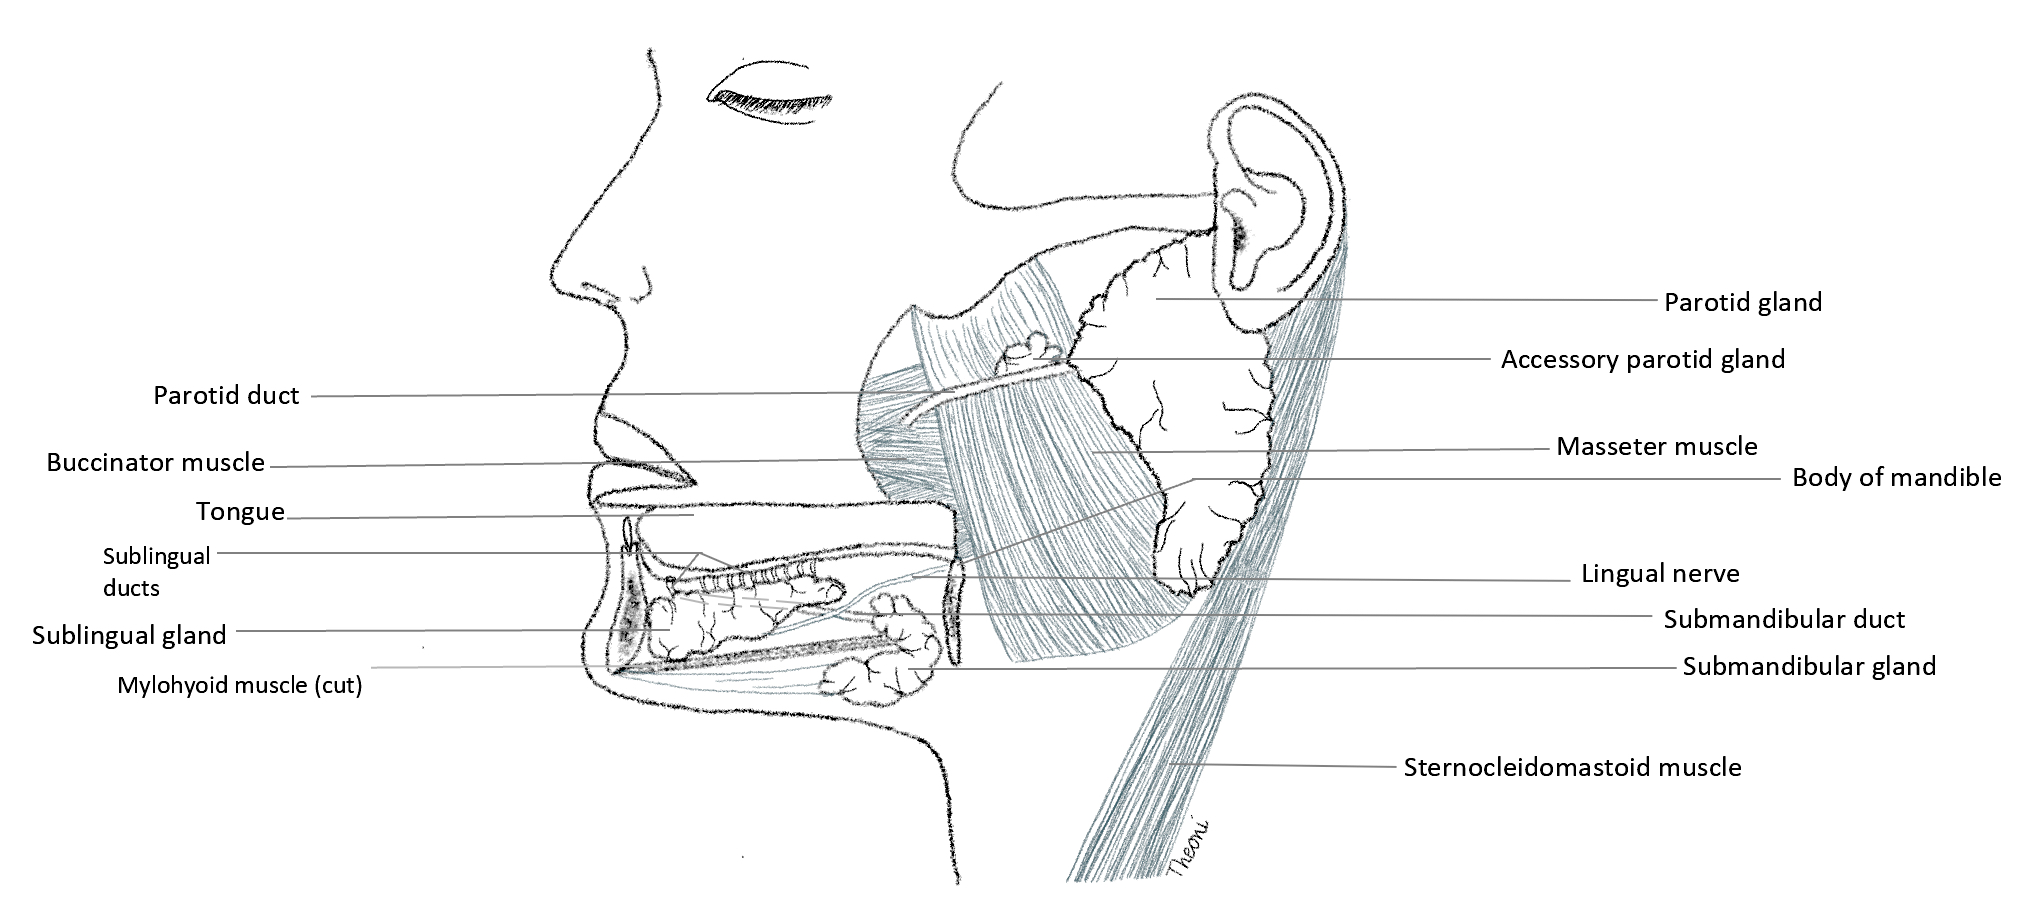 salivary glands diagram for kids